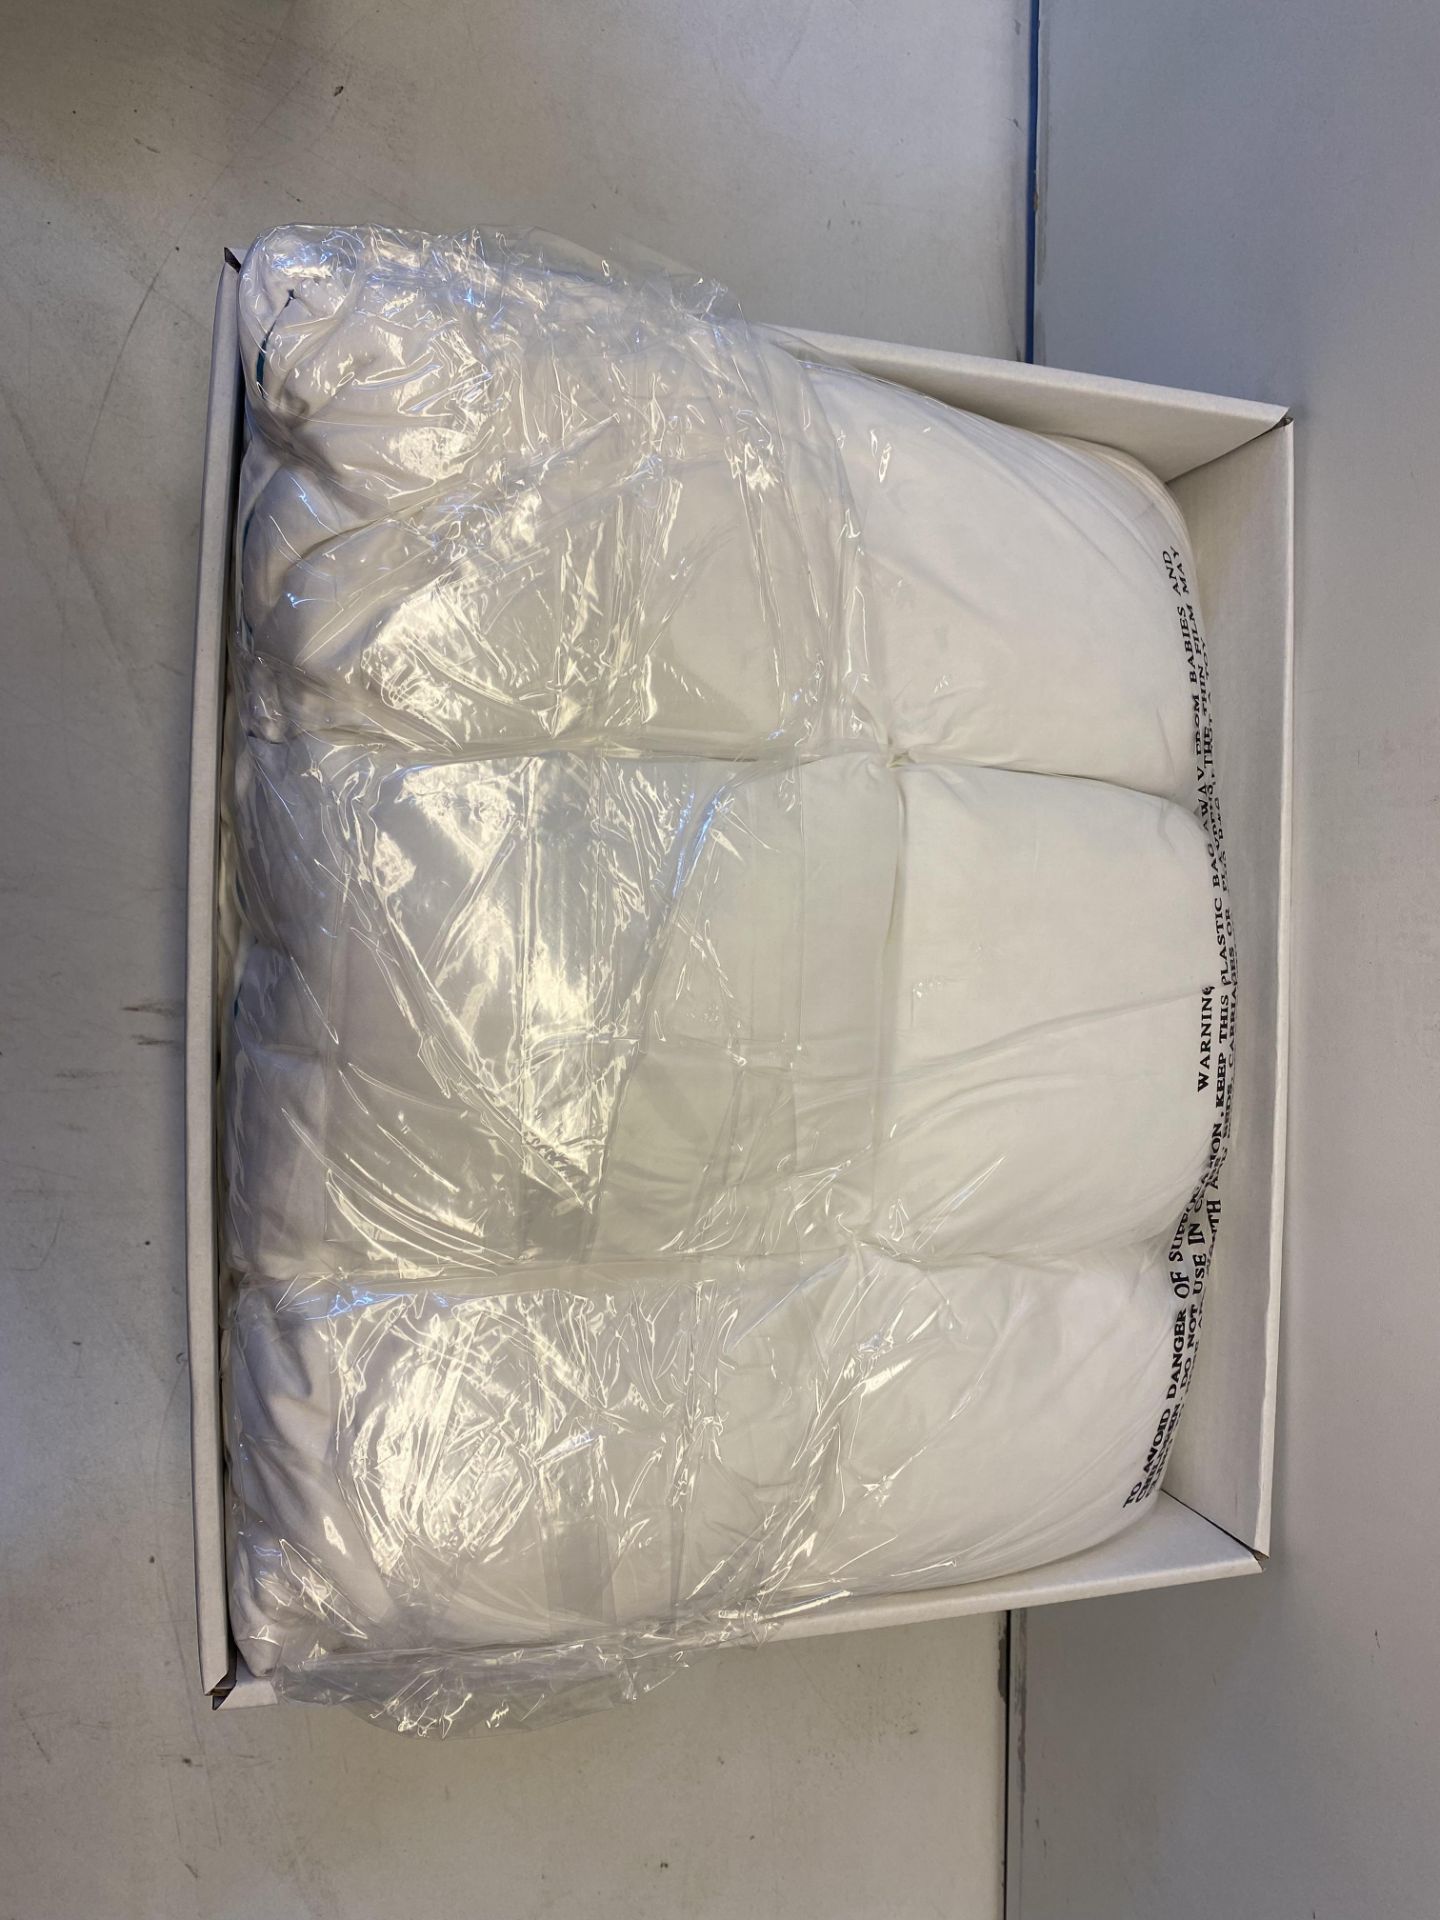 2 x ComfaSleep PL0001 Pillows - Image 7 of 9